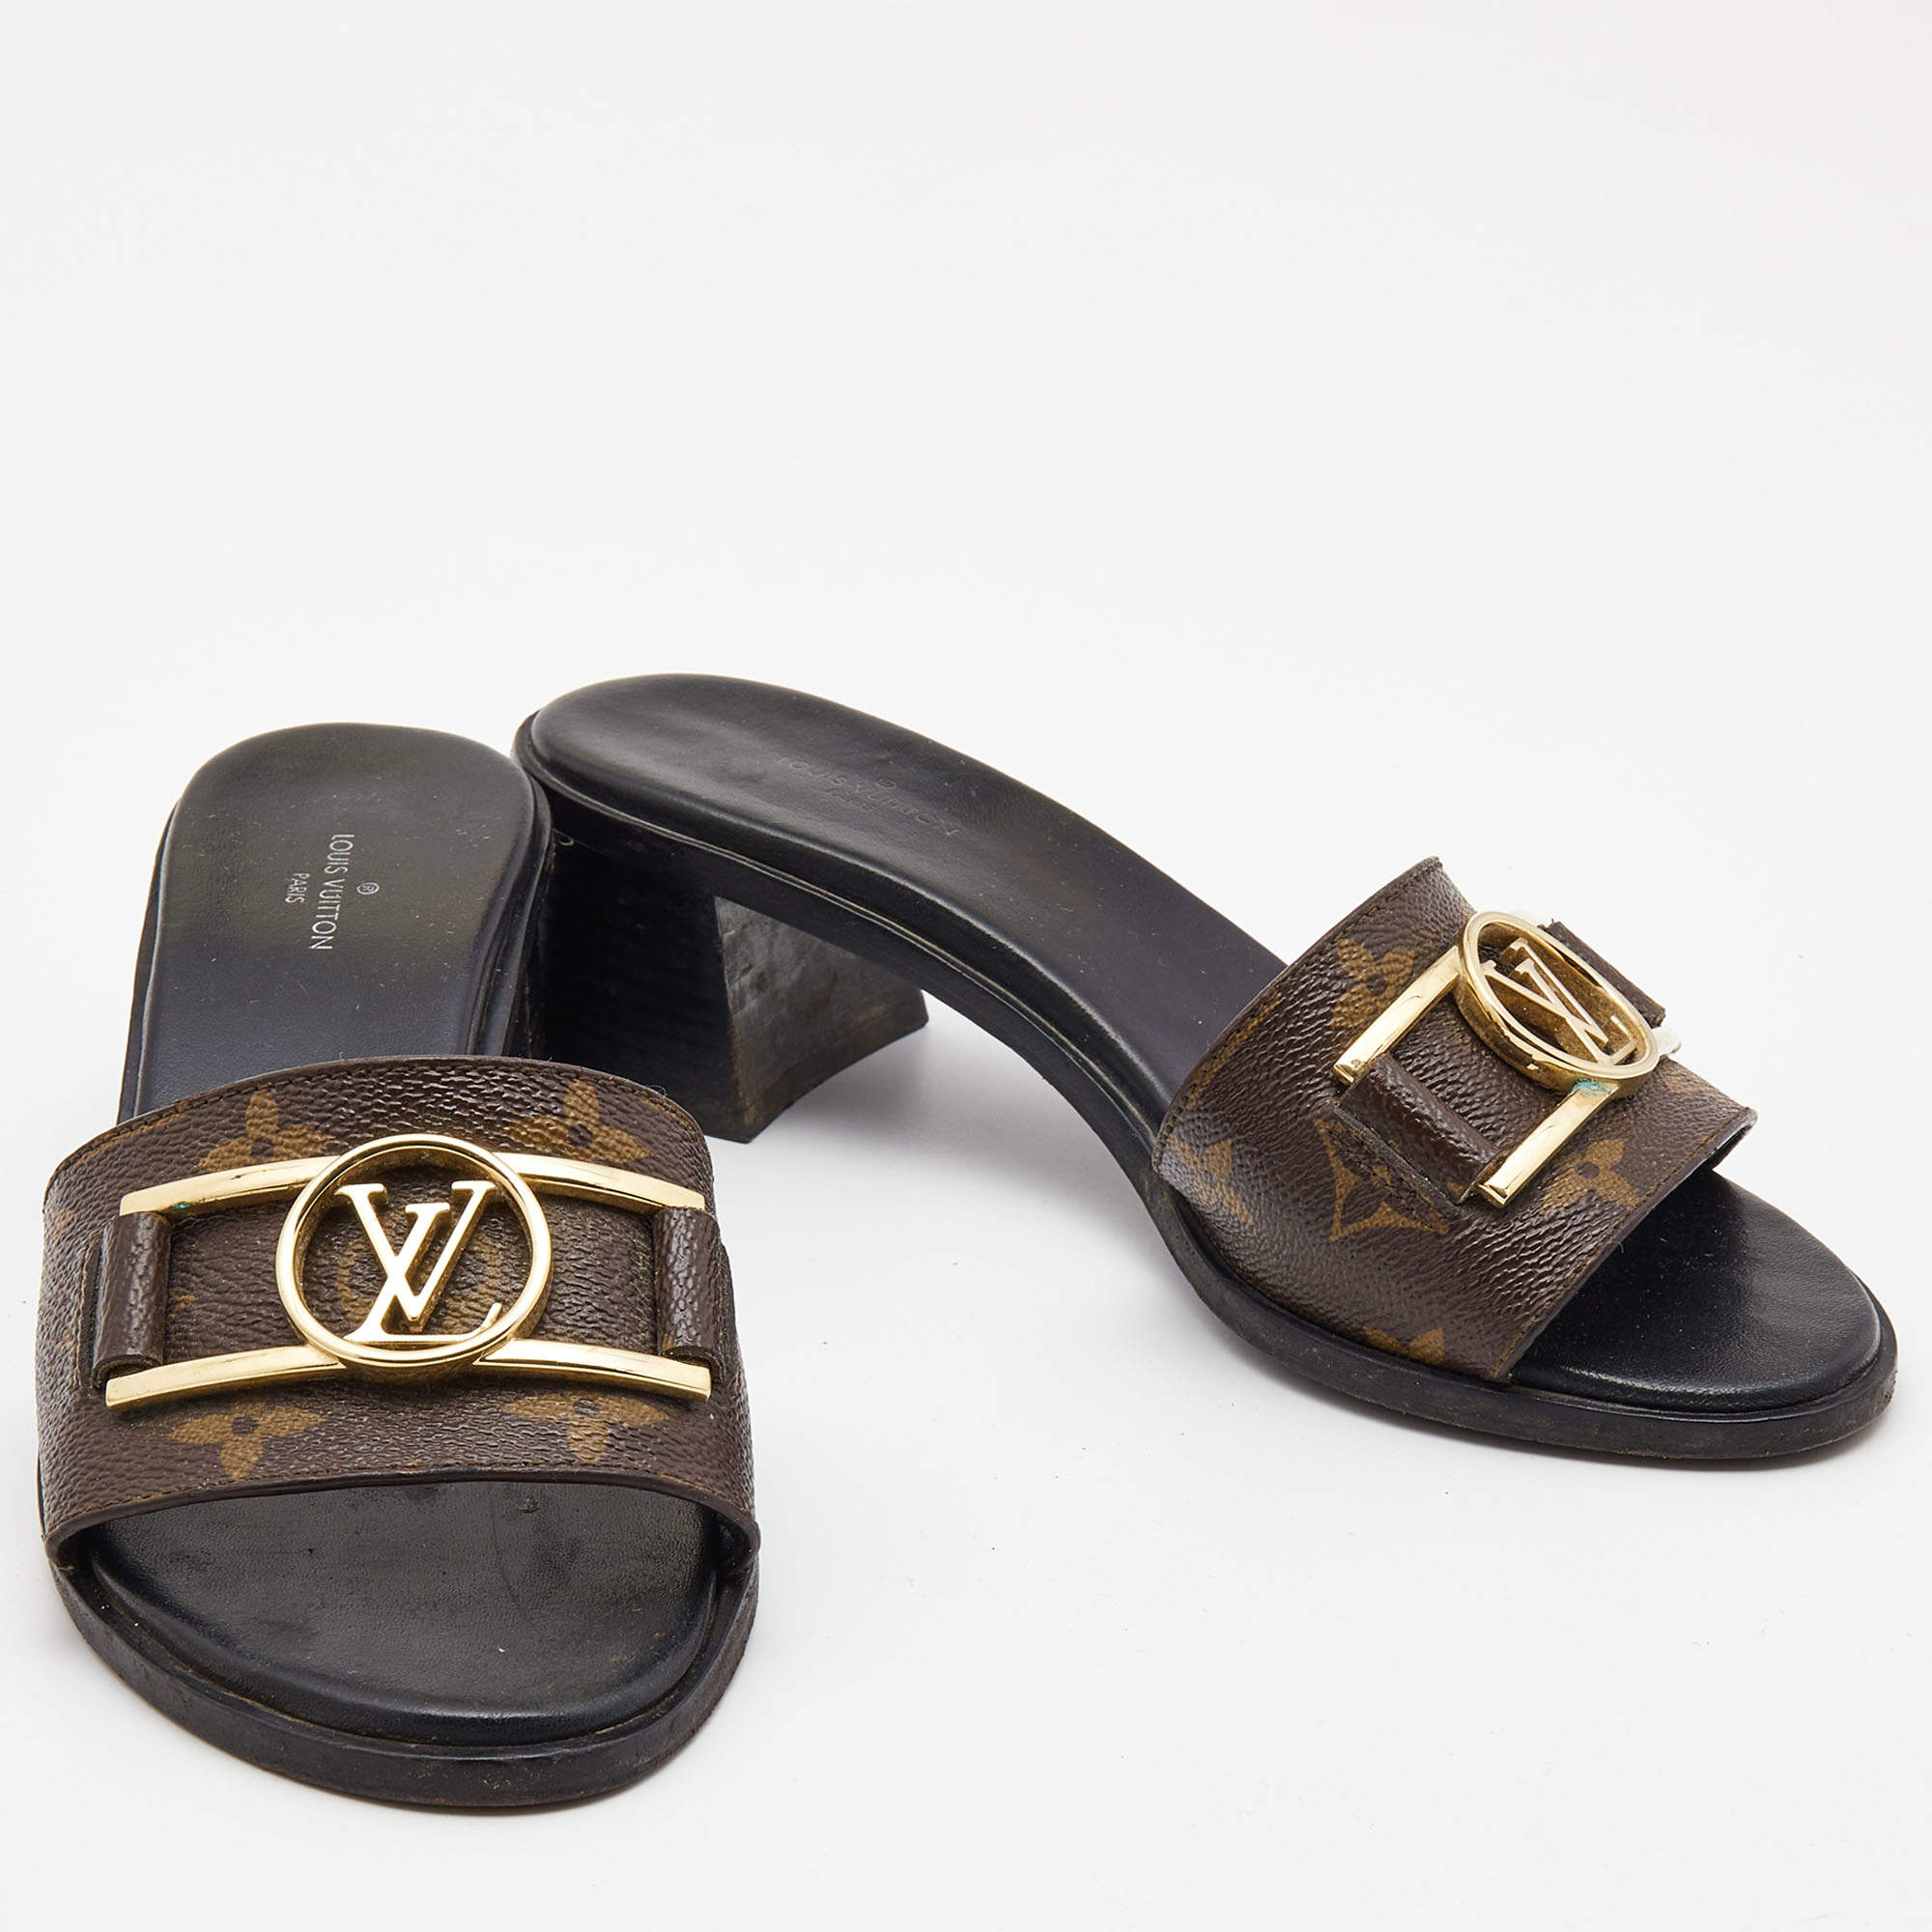 lv sandals price